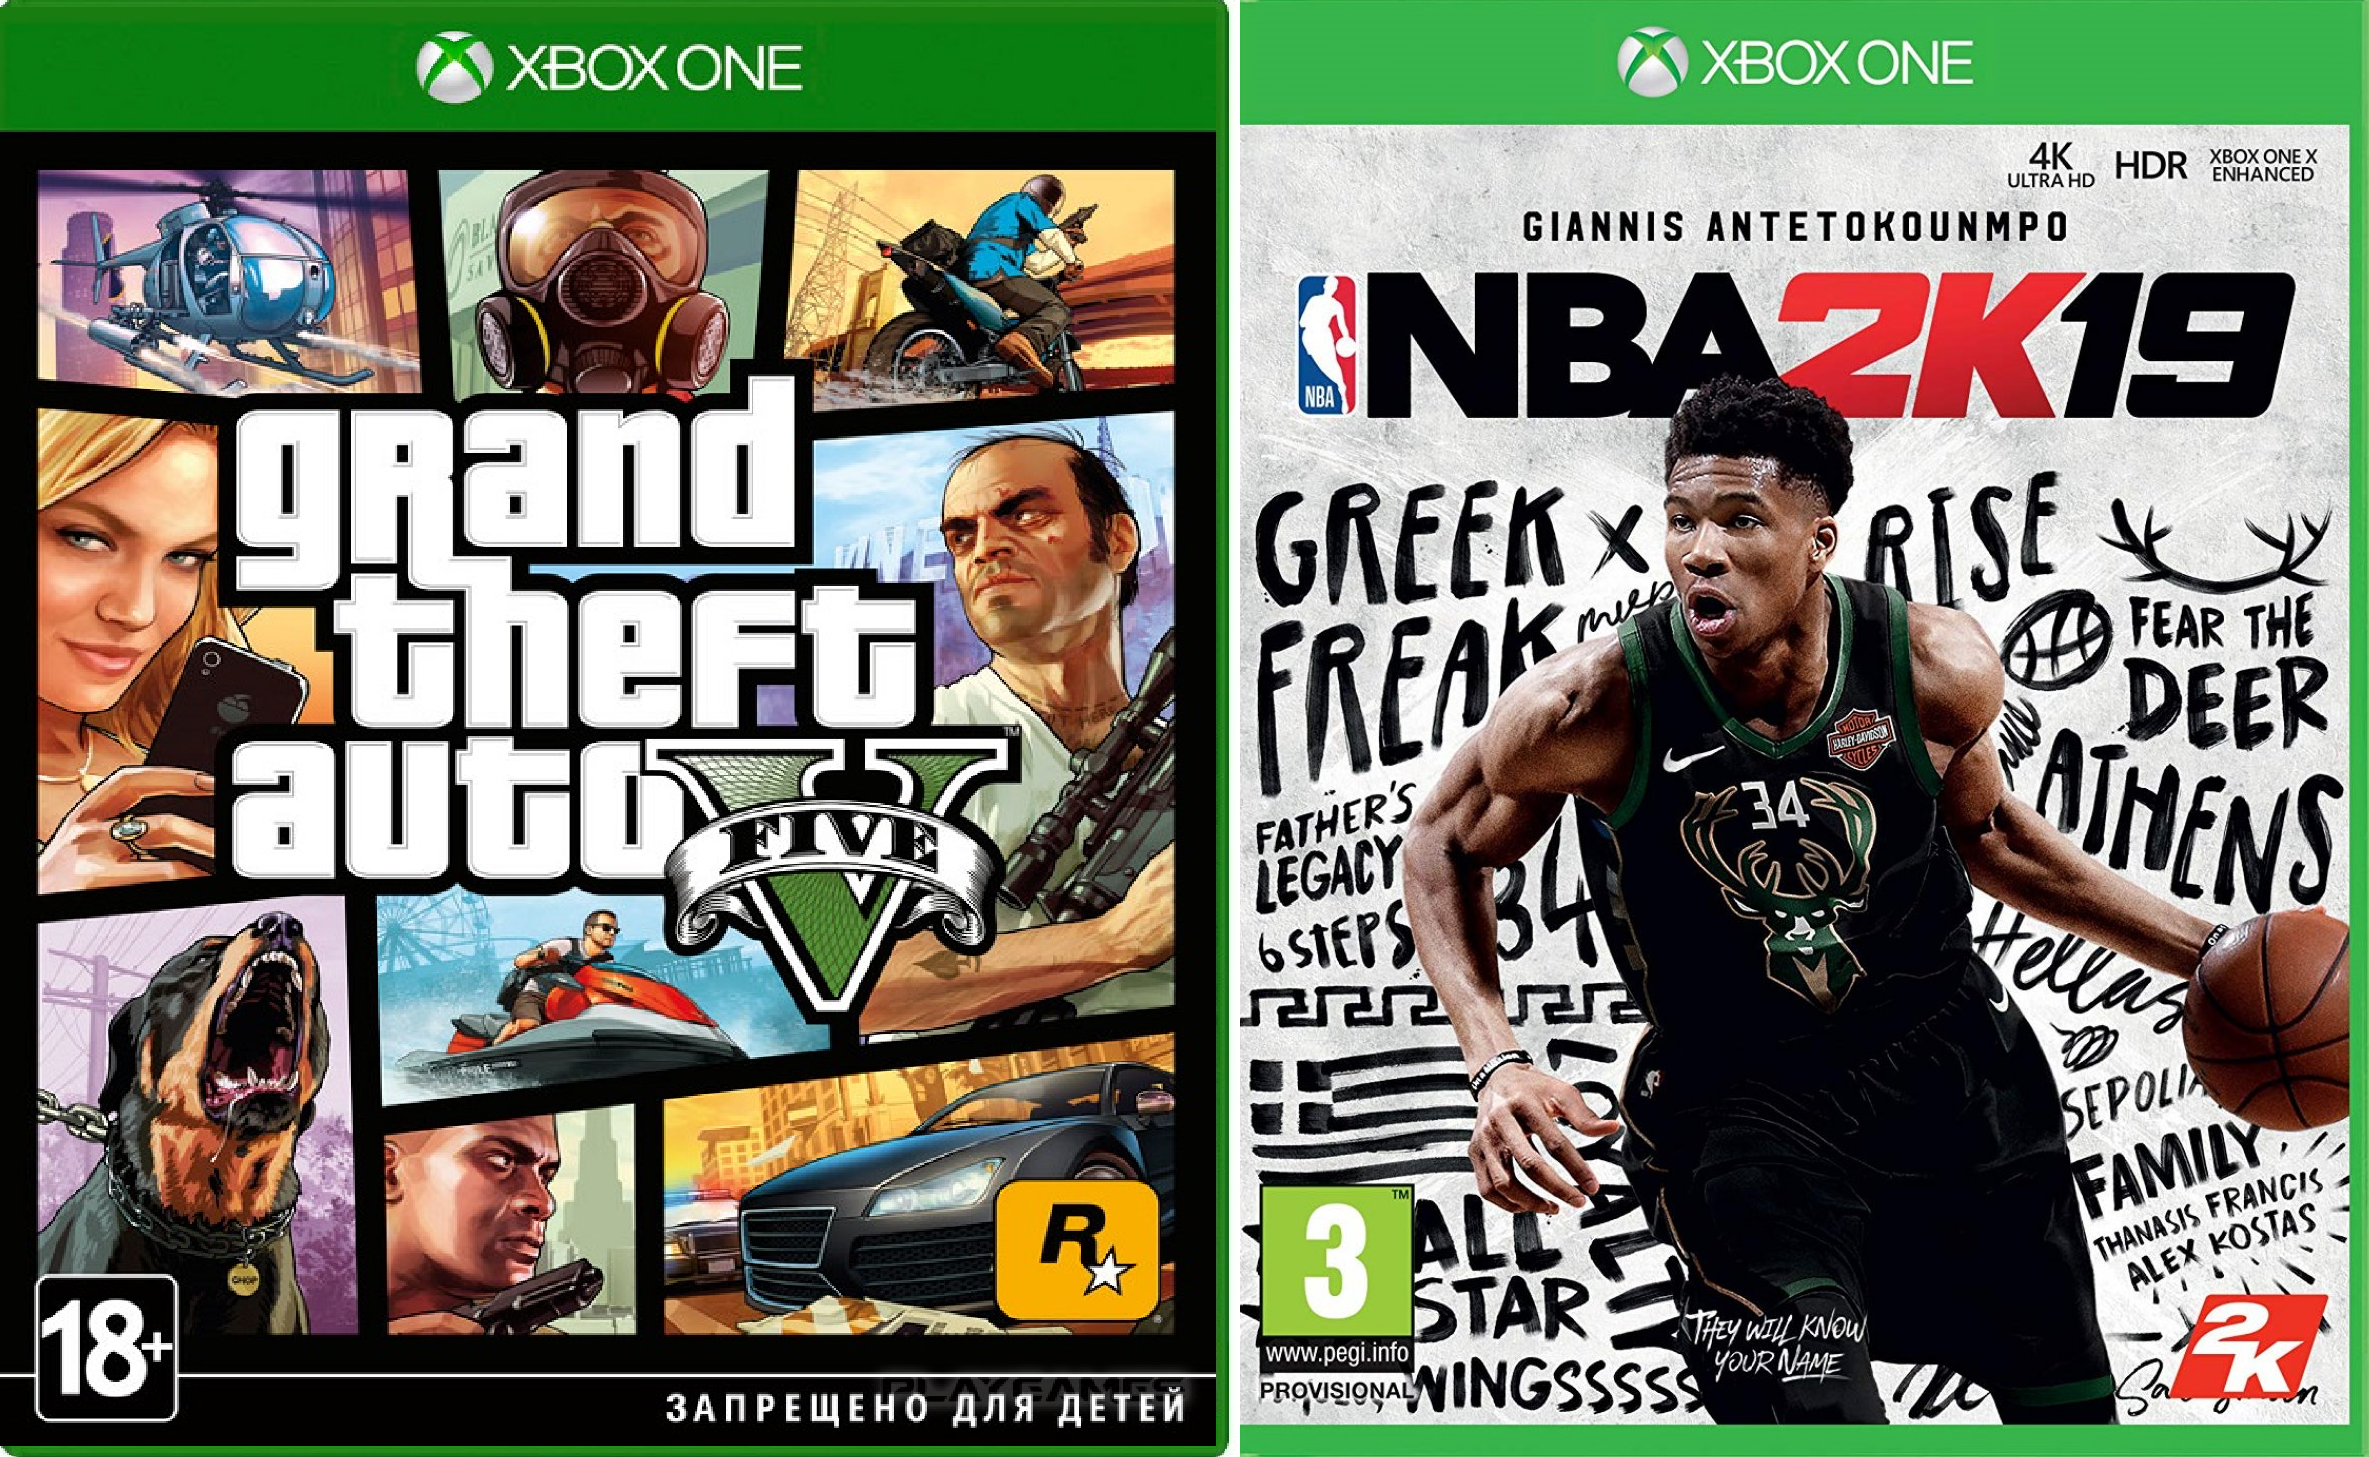 Игры для s x. GTA 5 Xbox 360 обложка. Xbox Series x игры. Аккаунт Xbox с играми. Xbox one s игры аккаунт.